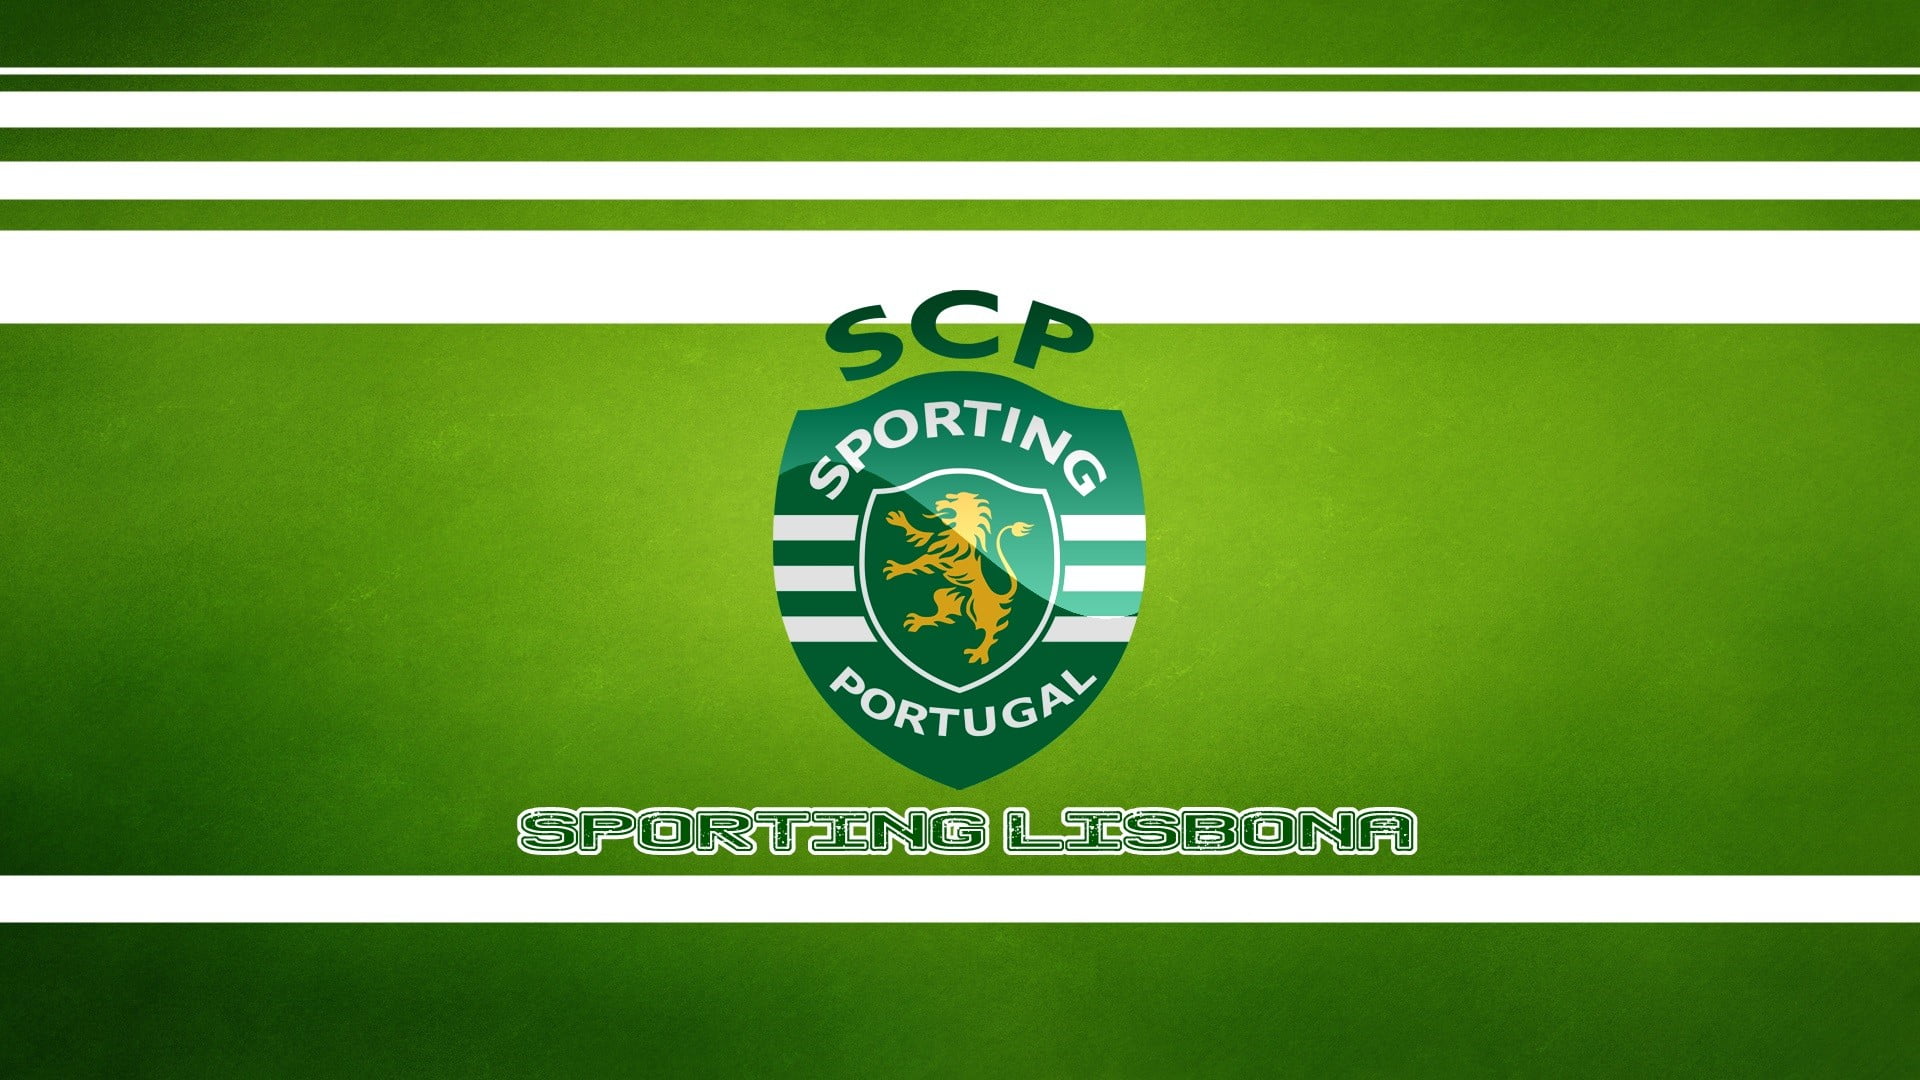 Scp Sporting Portugal Logo, Sporting Lisbona, Soccer - Fondos De Pantalla Sporting Lisboa , HD Wallpaper & Backgrounds